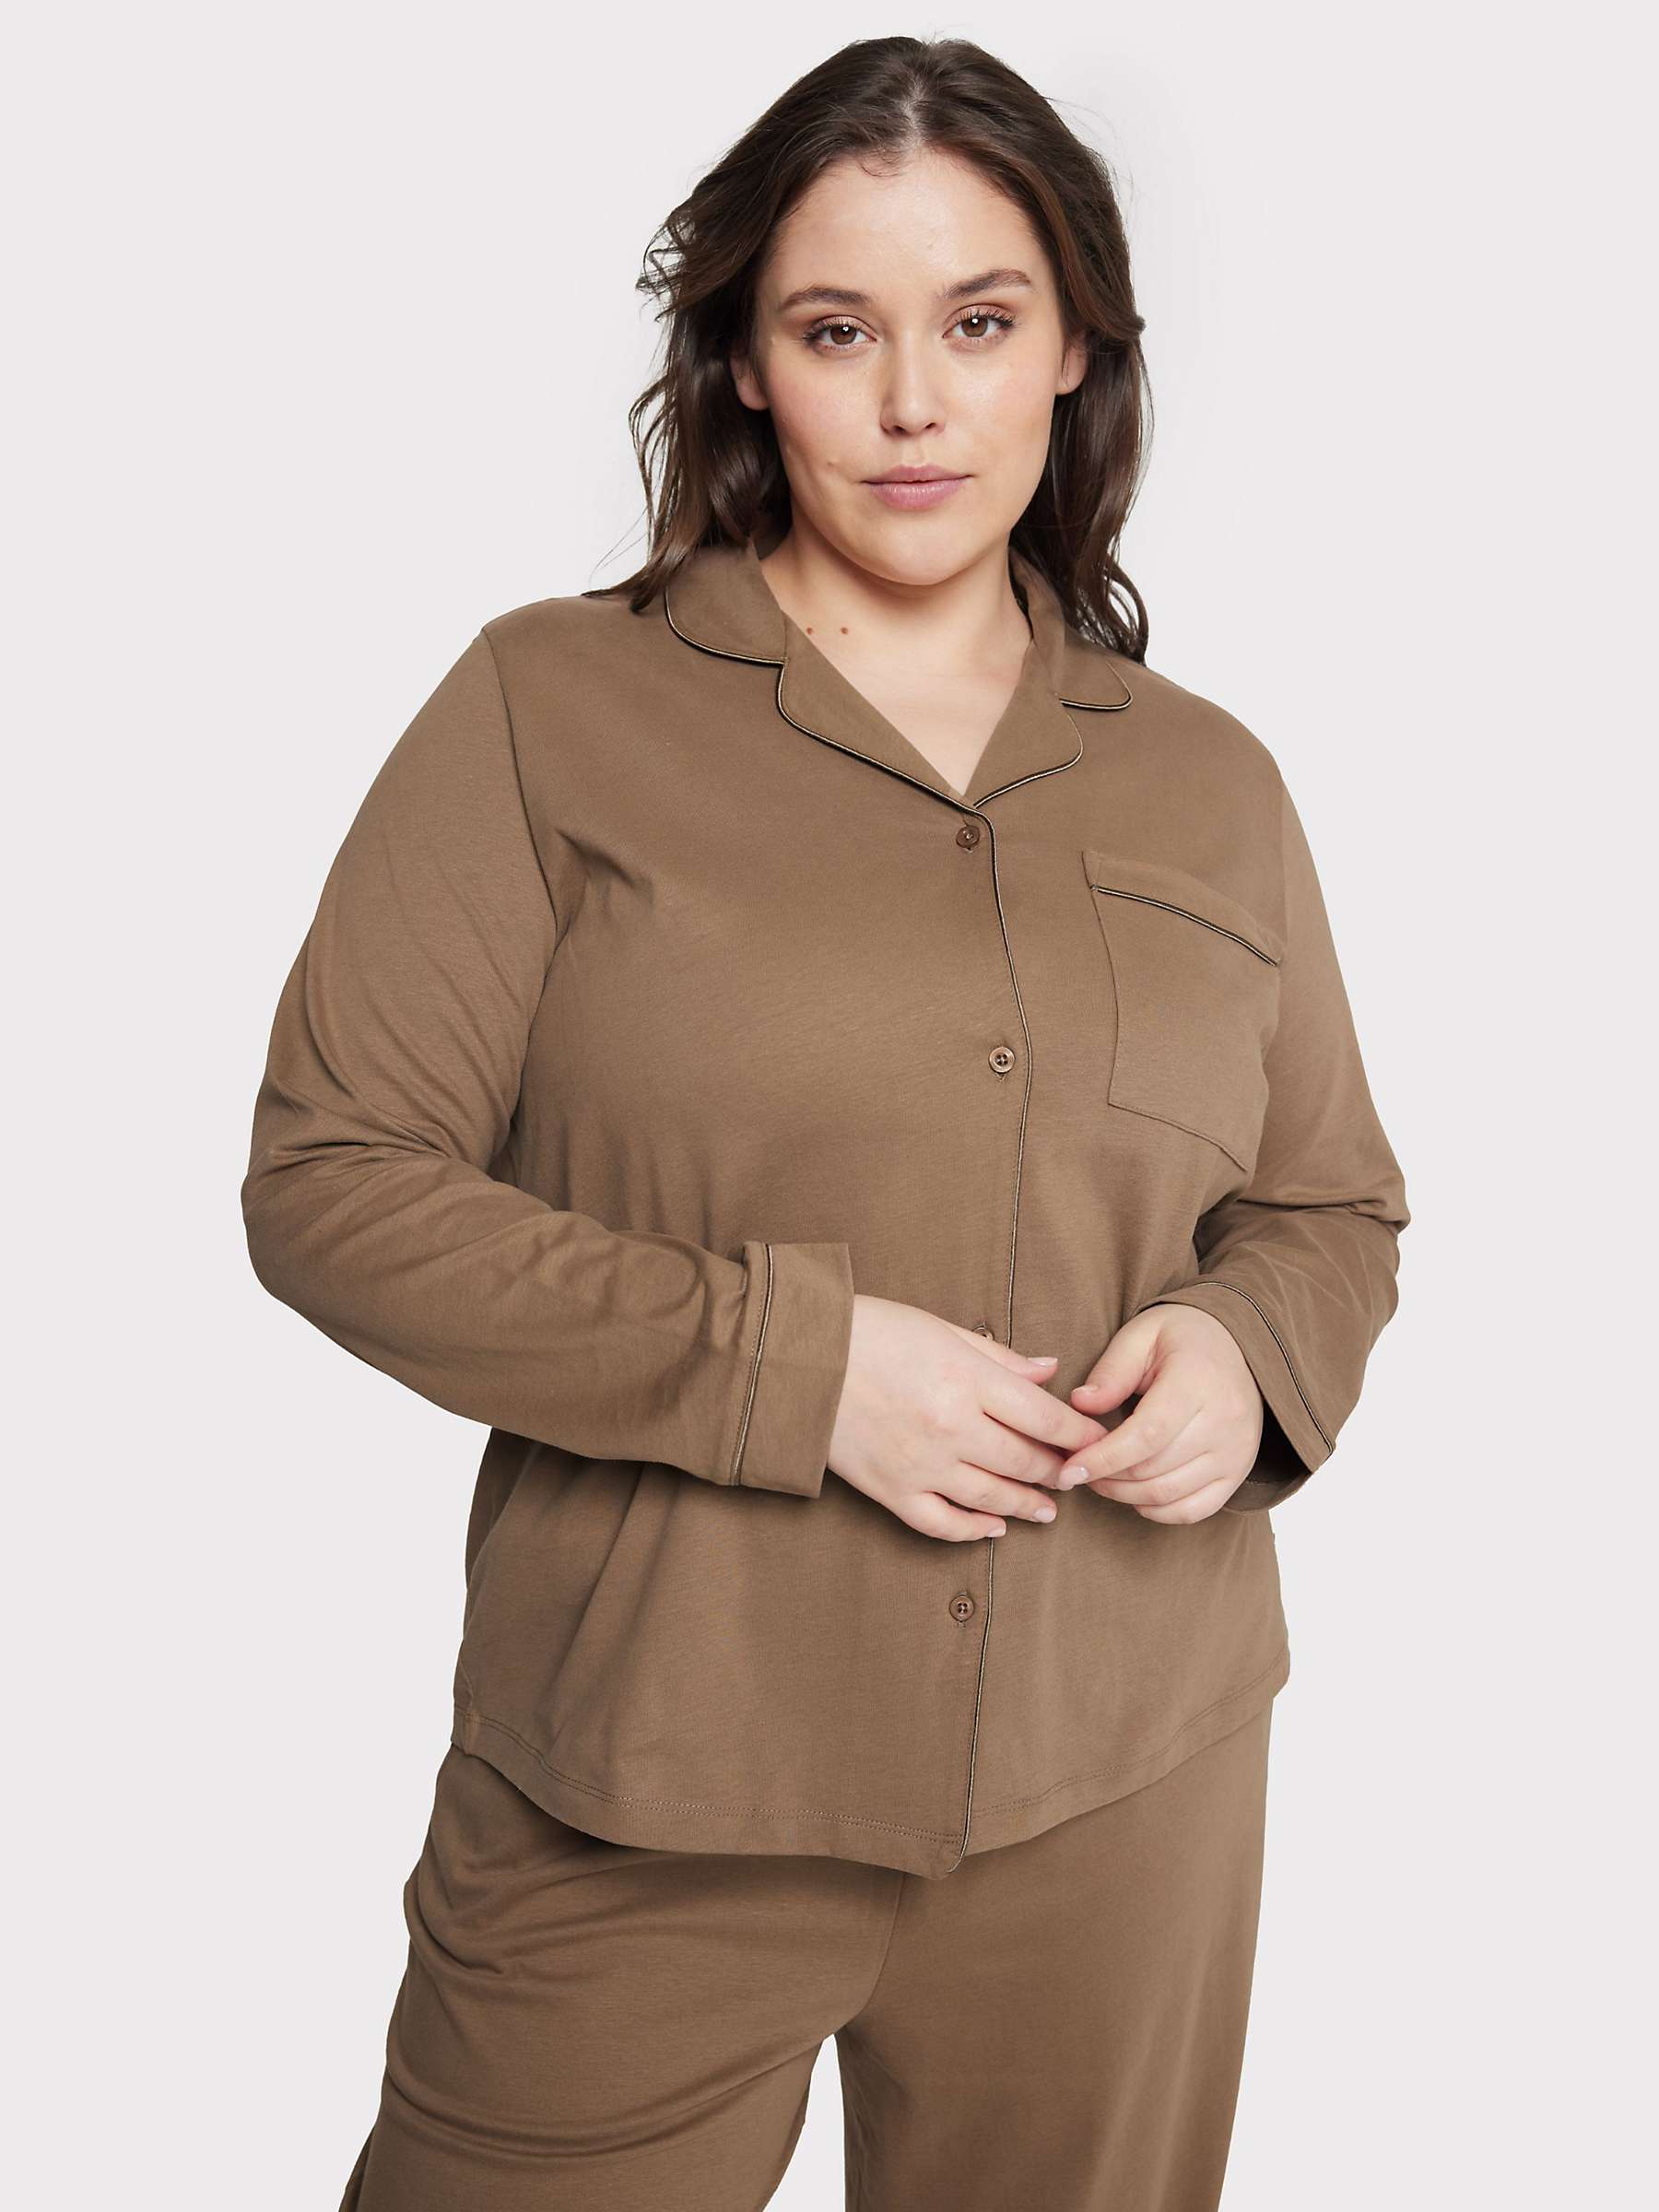 Buy Chelsea Peers Curve Organic Cotton Pyjama Set Online at johnlewis.com